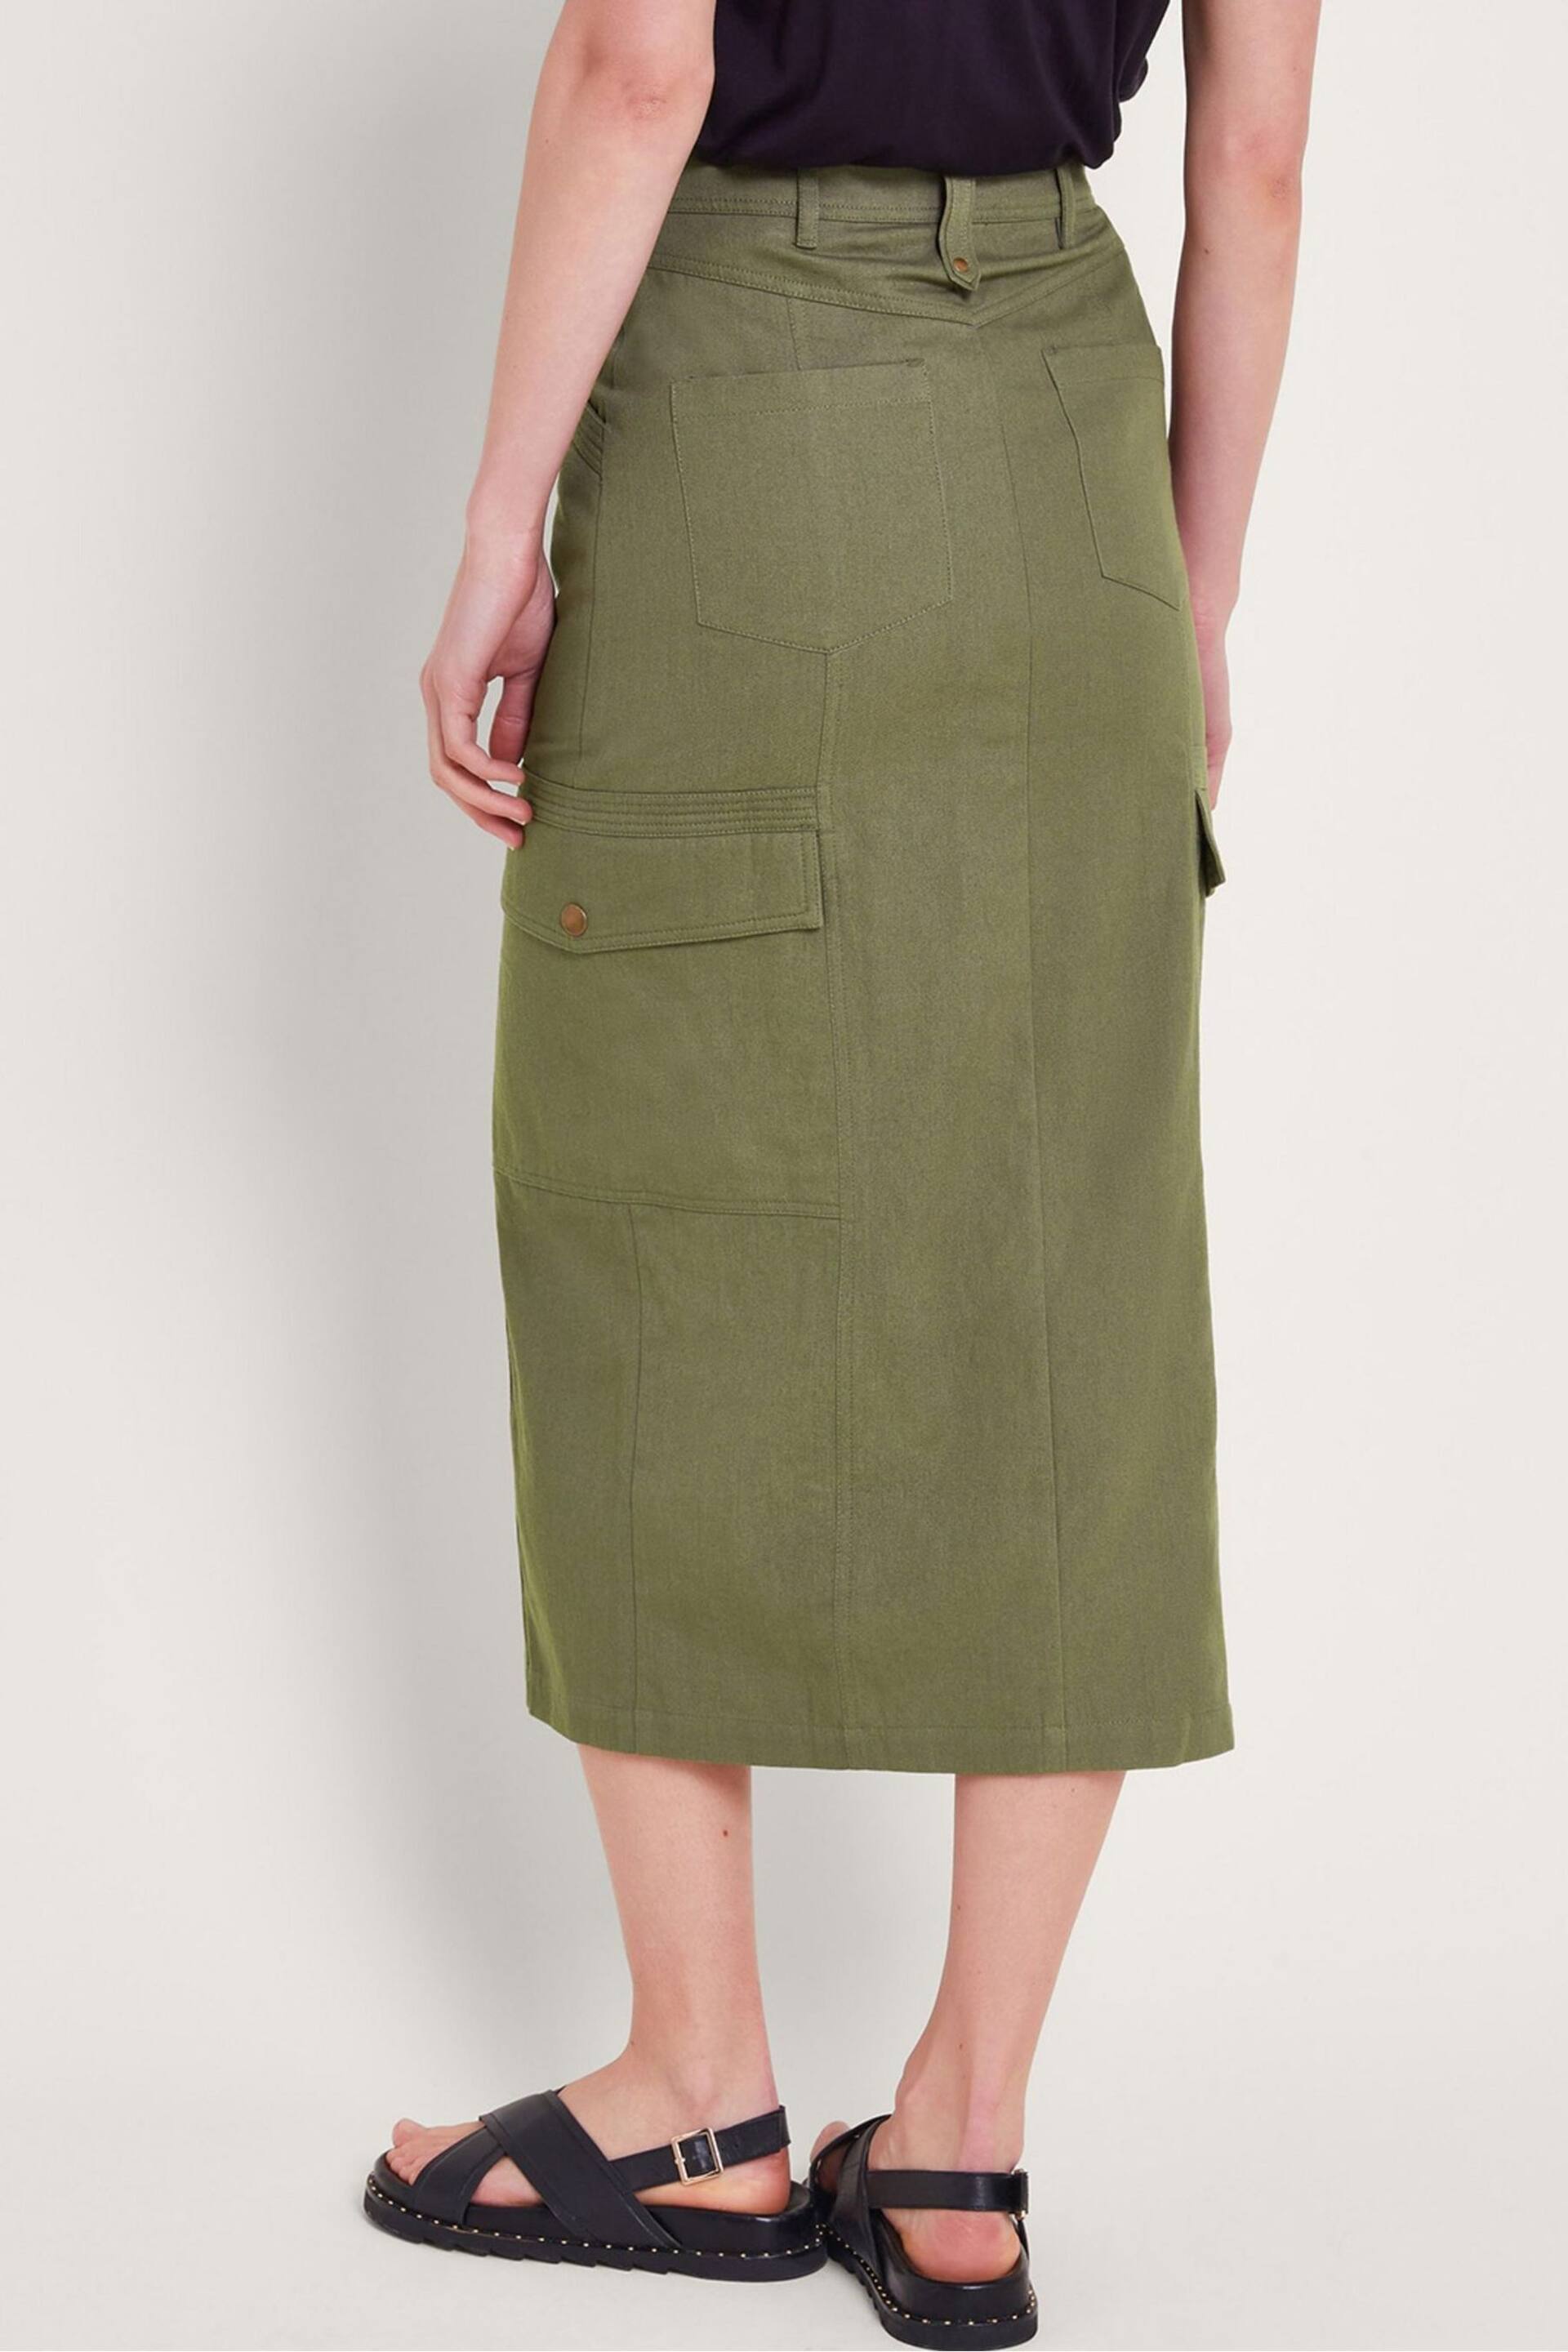 Monsoon Green Lucia Cargo Midi Skirt - Image 3 of 5